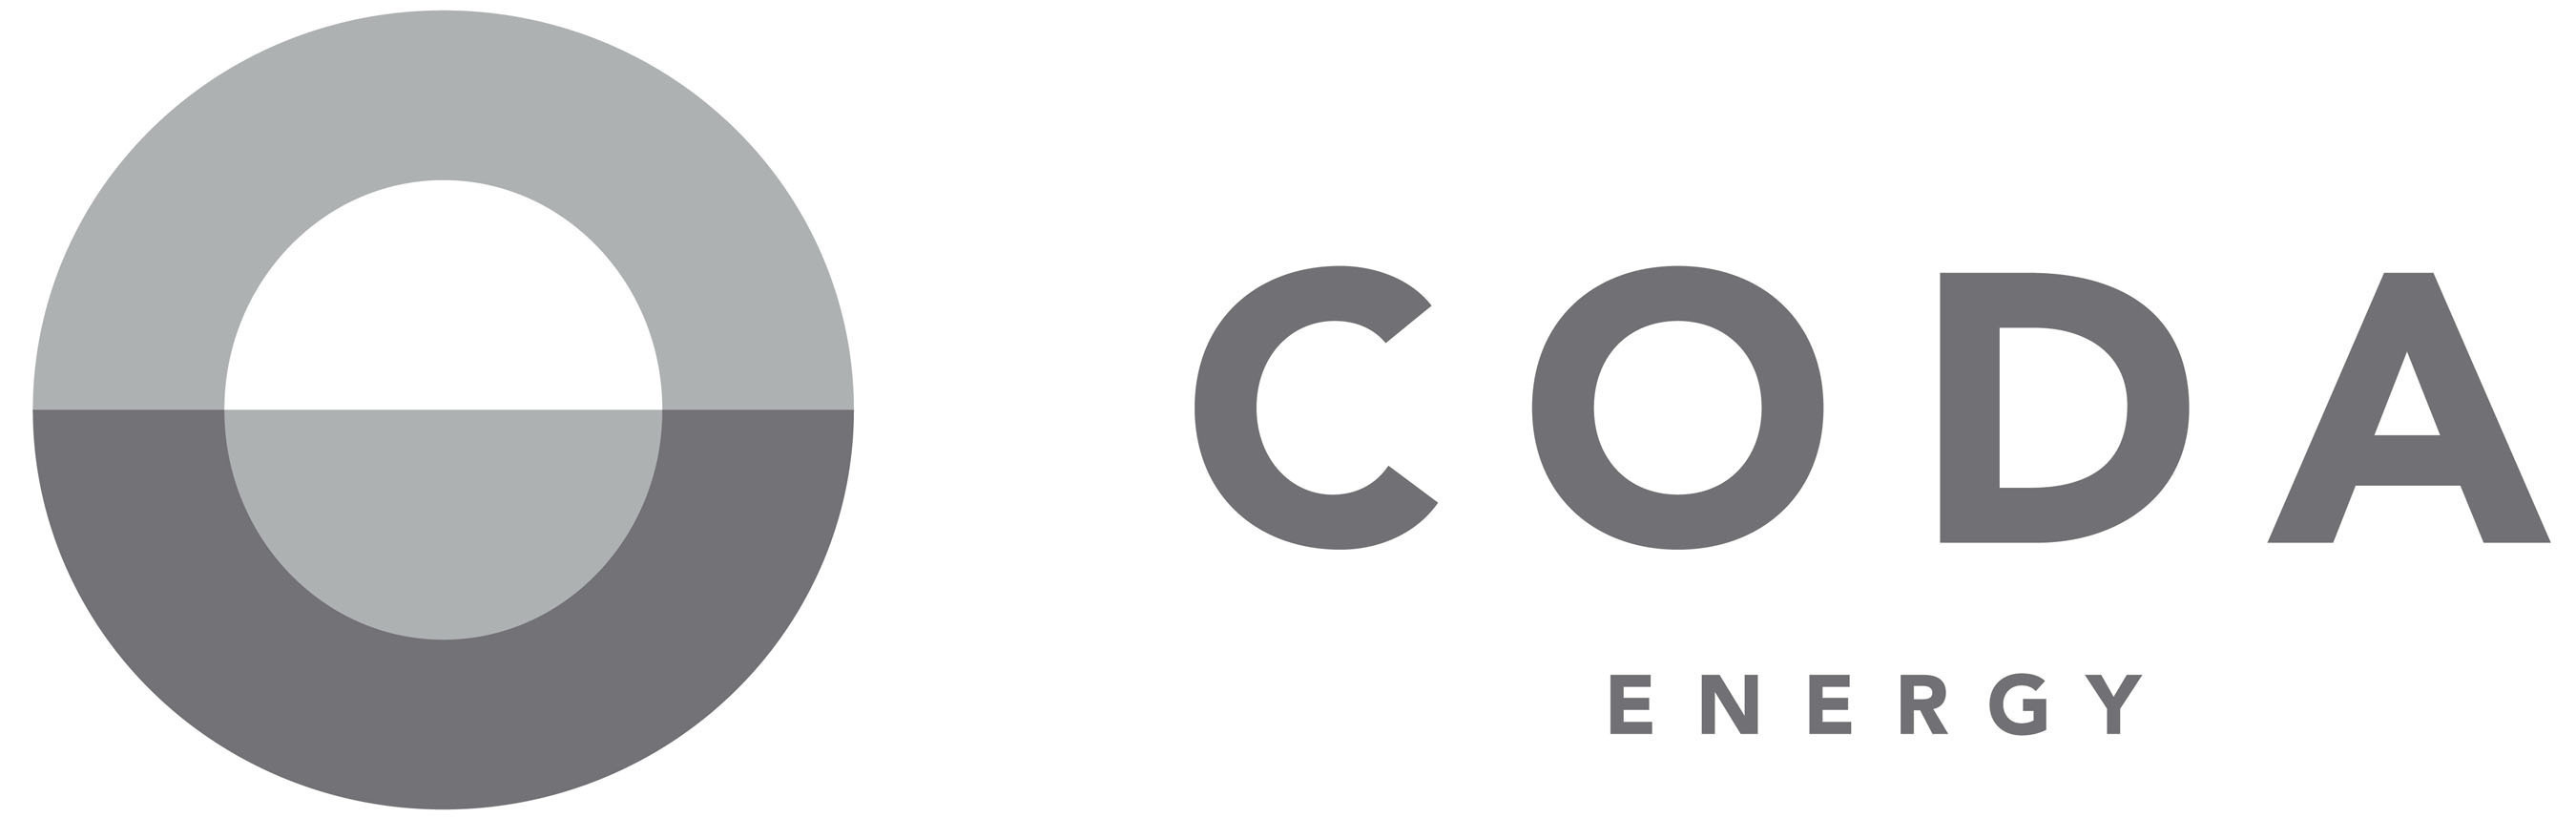 CODA Energy Logo. (PRNewsFoto/CODA Energy) (PRNewsFoto/)